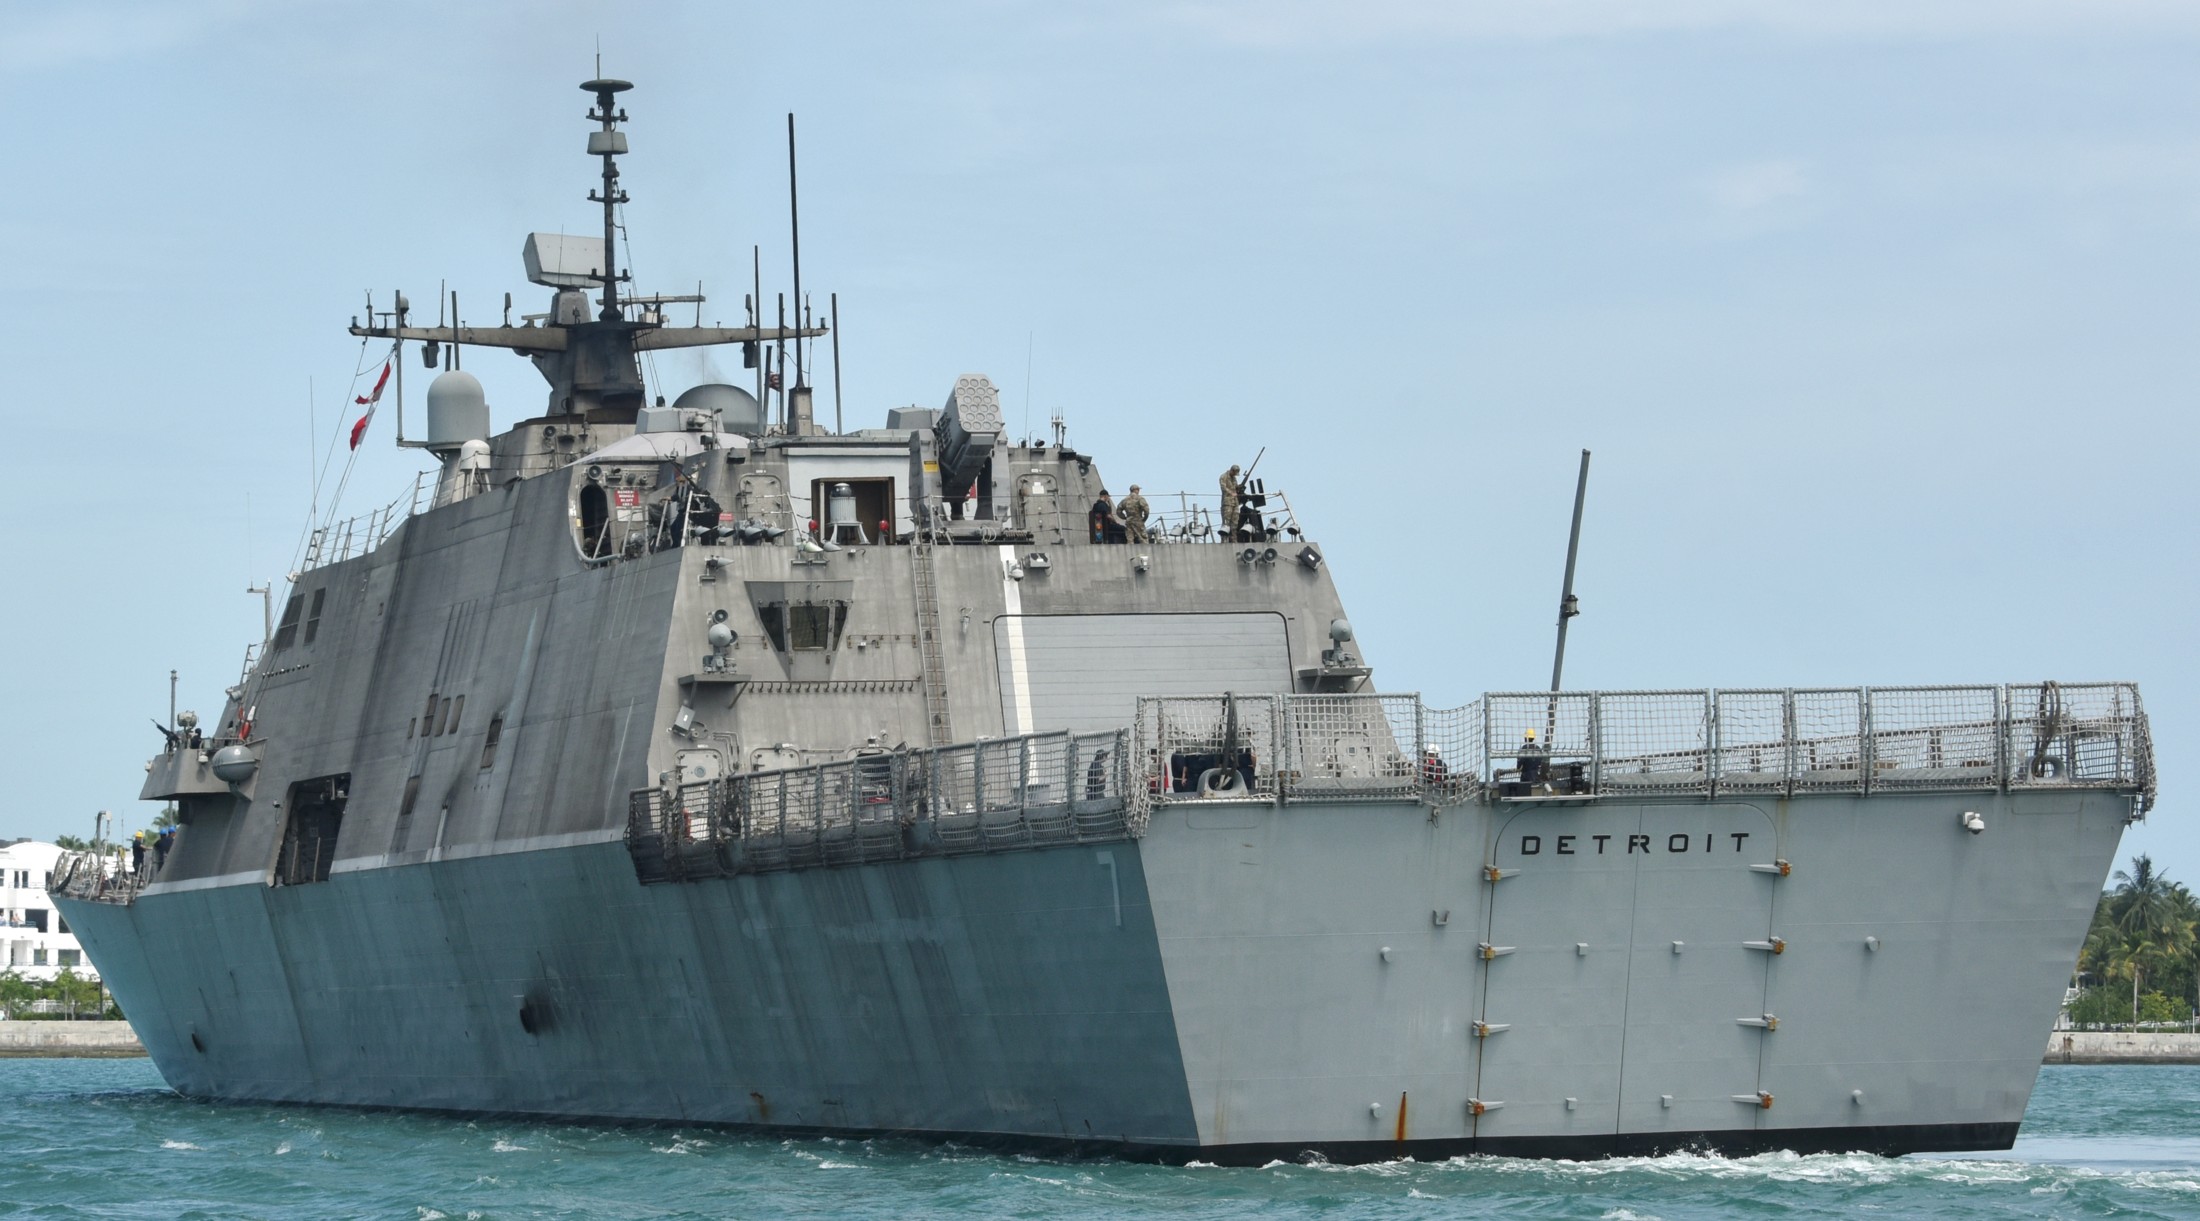 lcs-7 uss detroit freedom class littoral combat ship us navy 57 nas key west florida